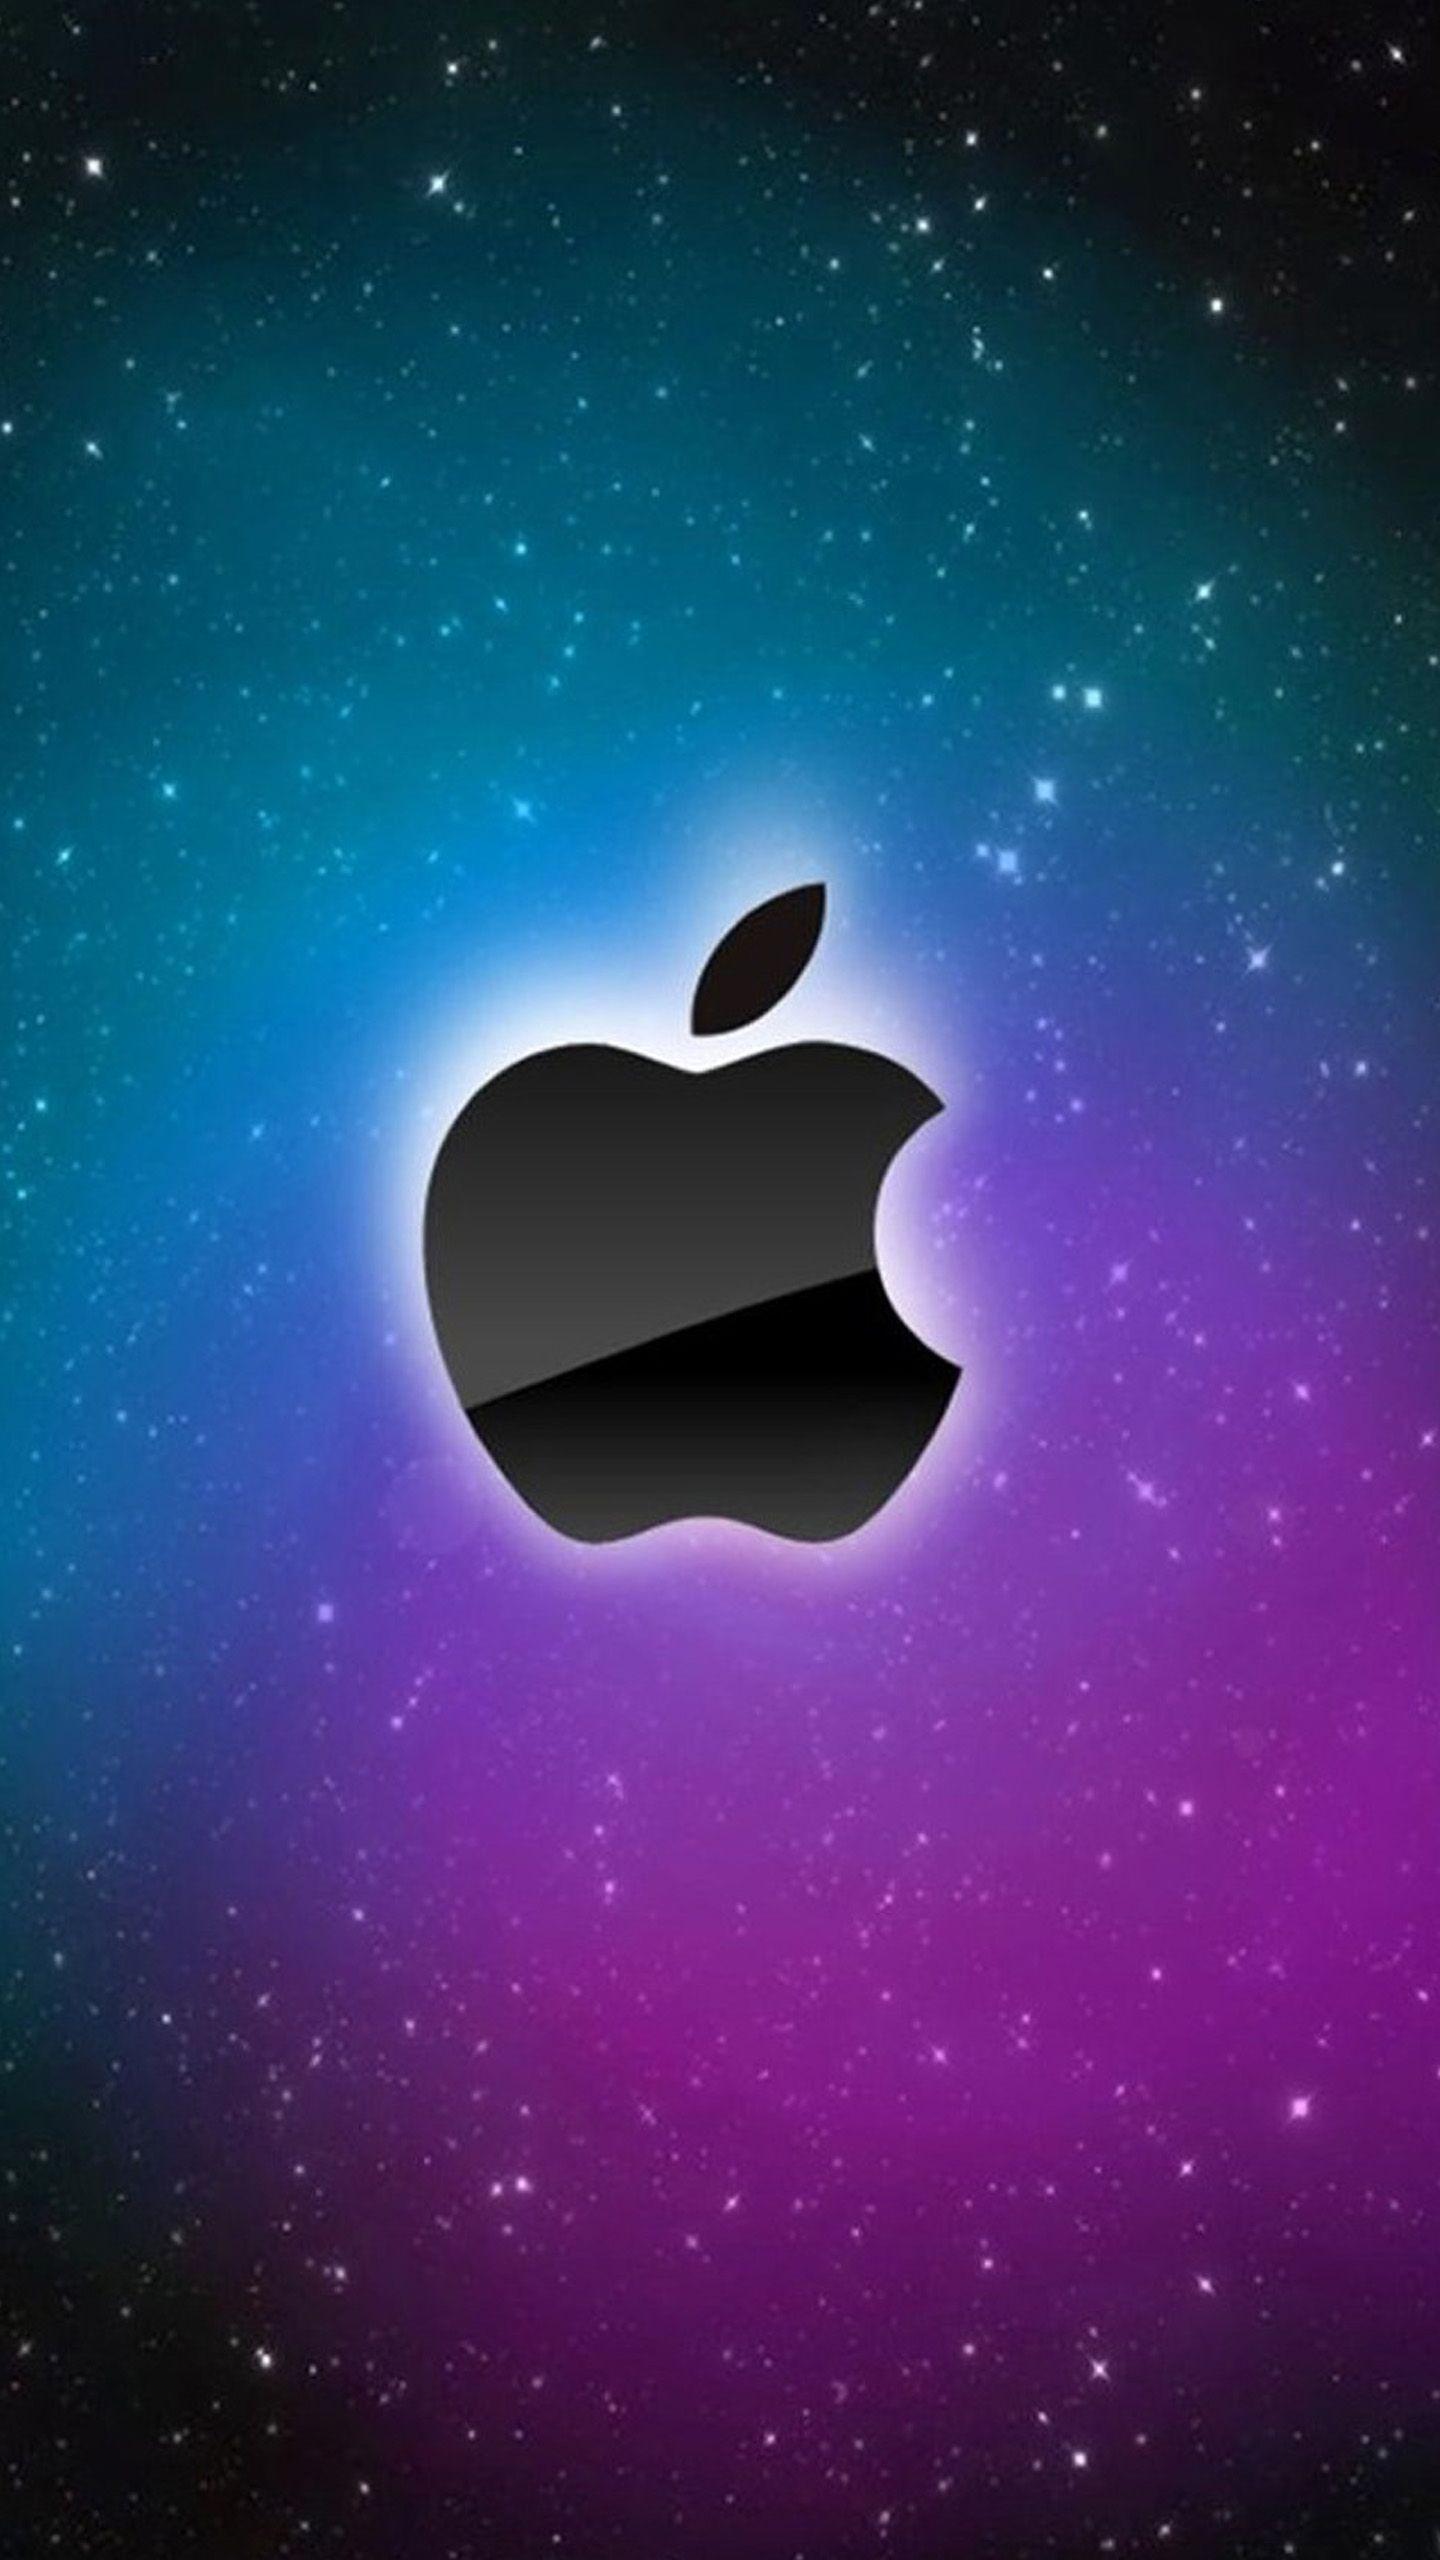 Galxay Apple Logo - Awesome Apple logo 5 Galaxy S6 Wallpaper. Galaxy S6 Wallpaper